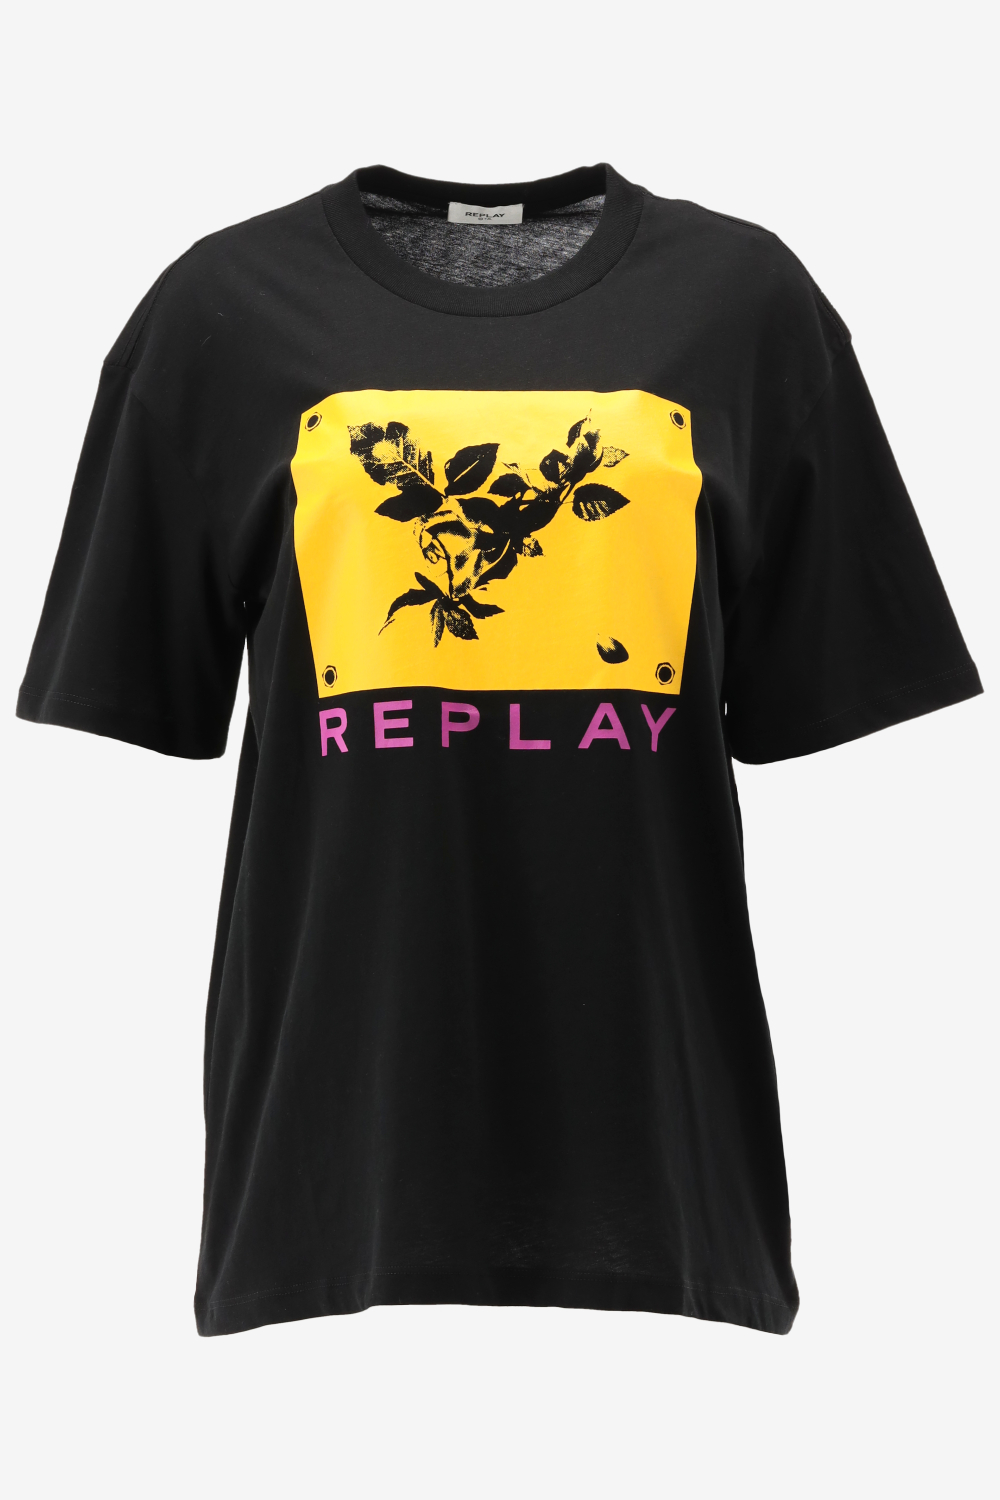 Replay t-shirt maat S